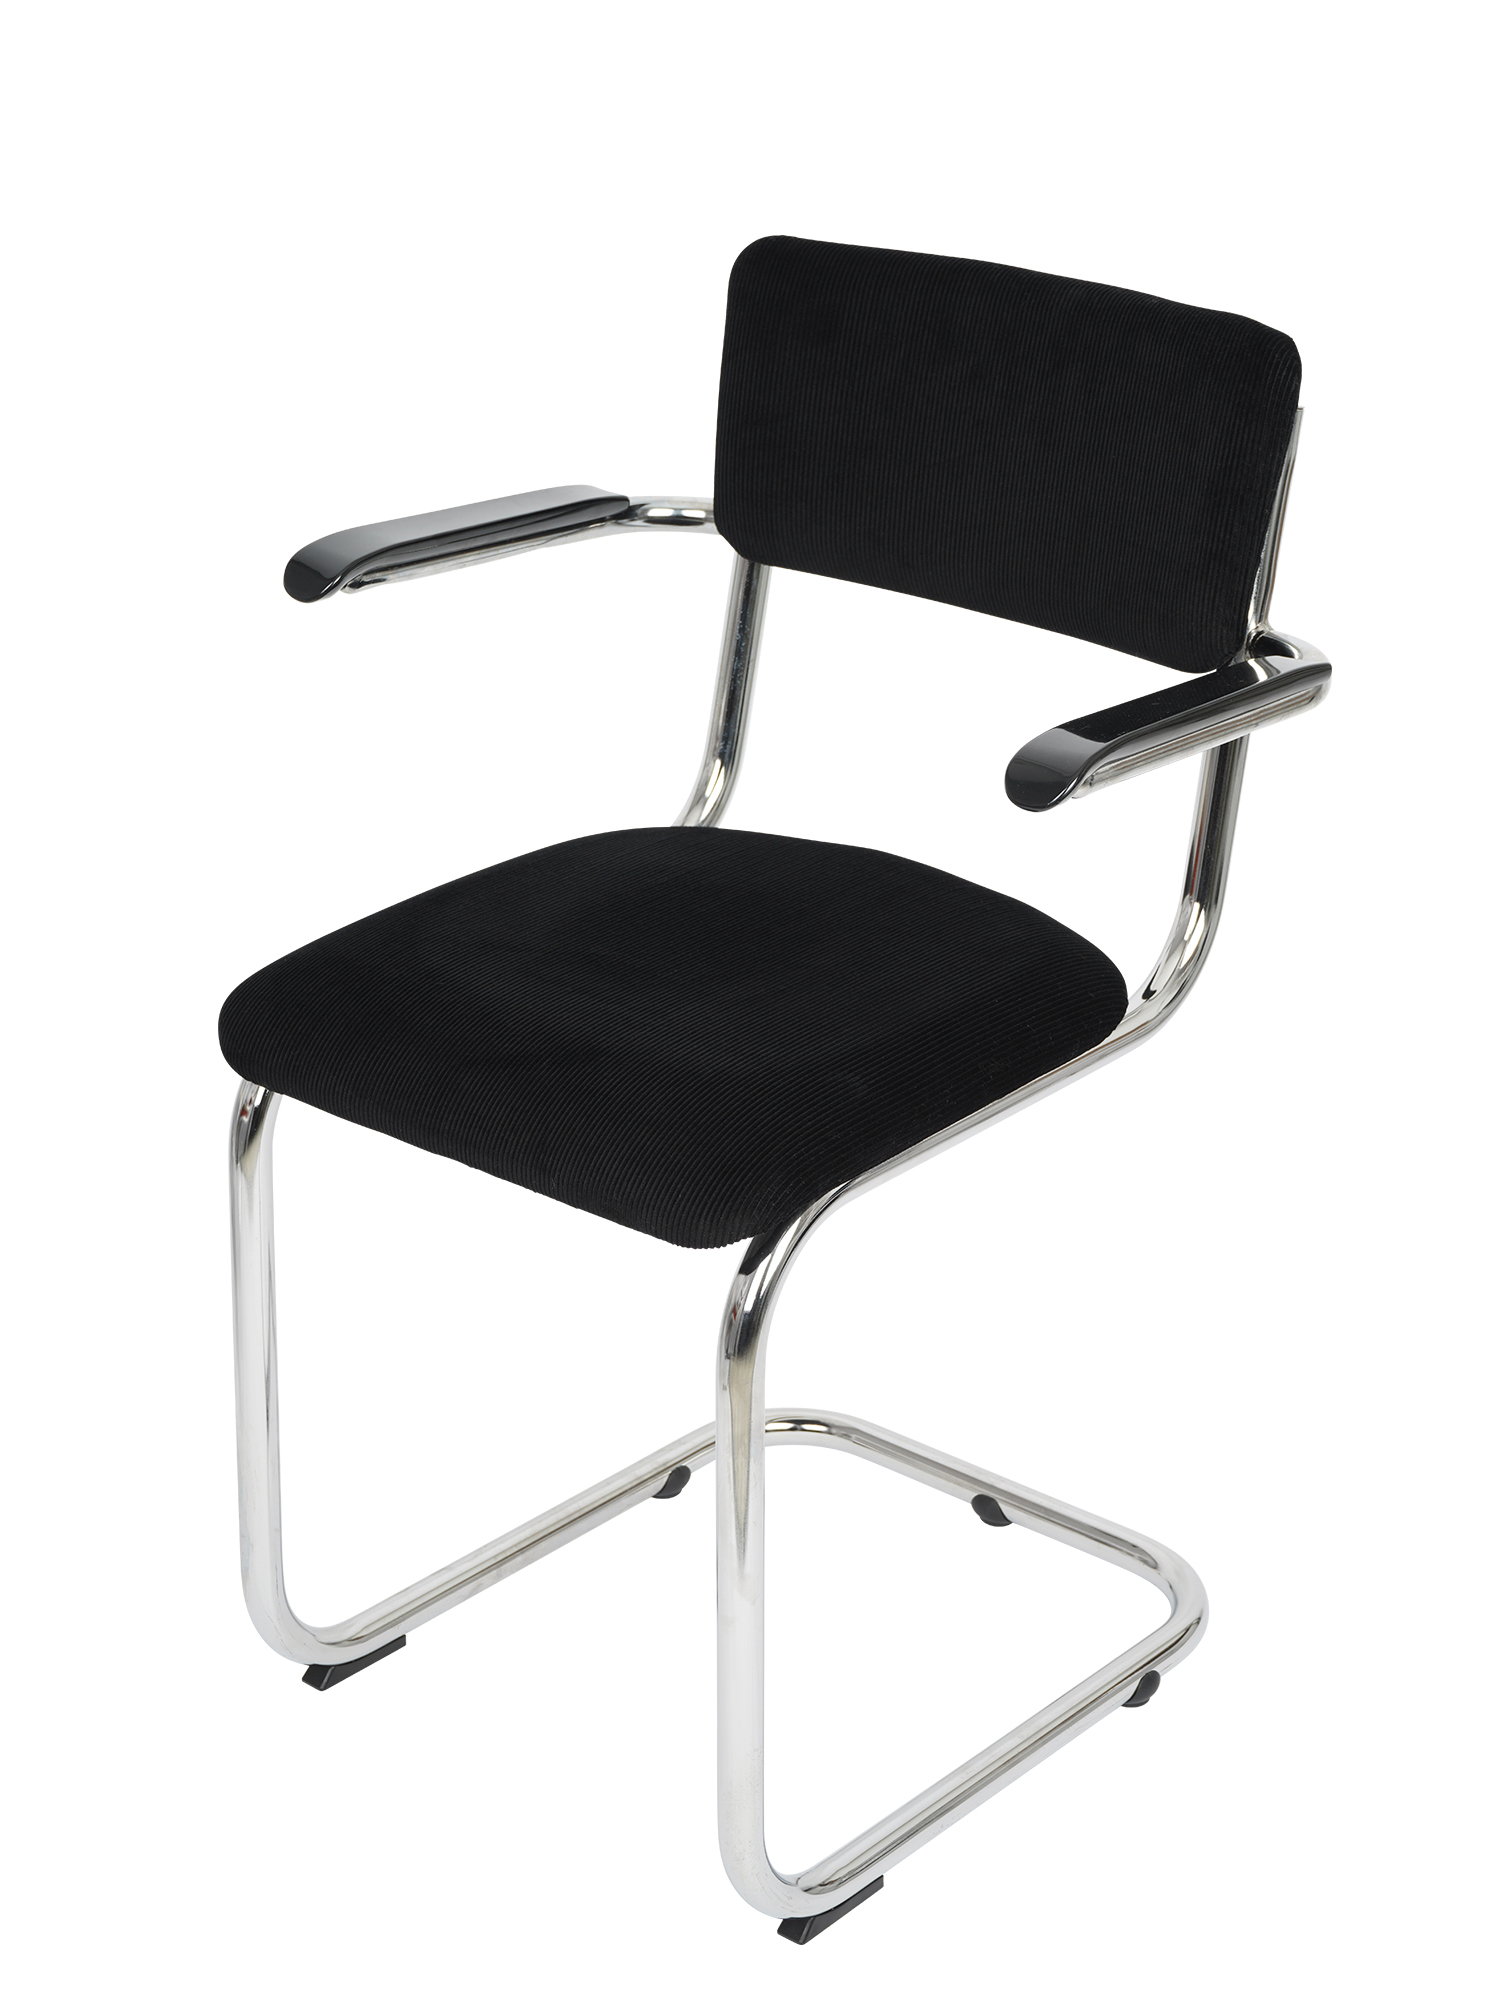 [TUBAX] Cantilever Arm Chair Manchester Black